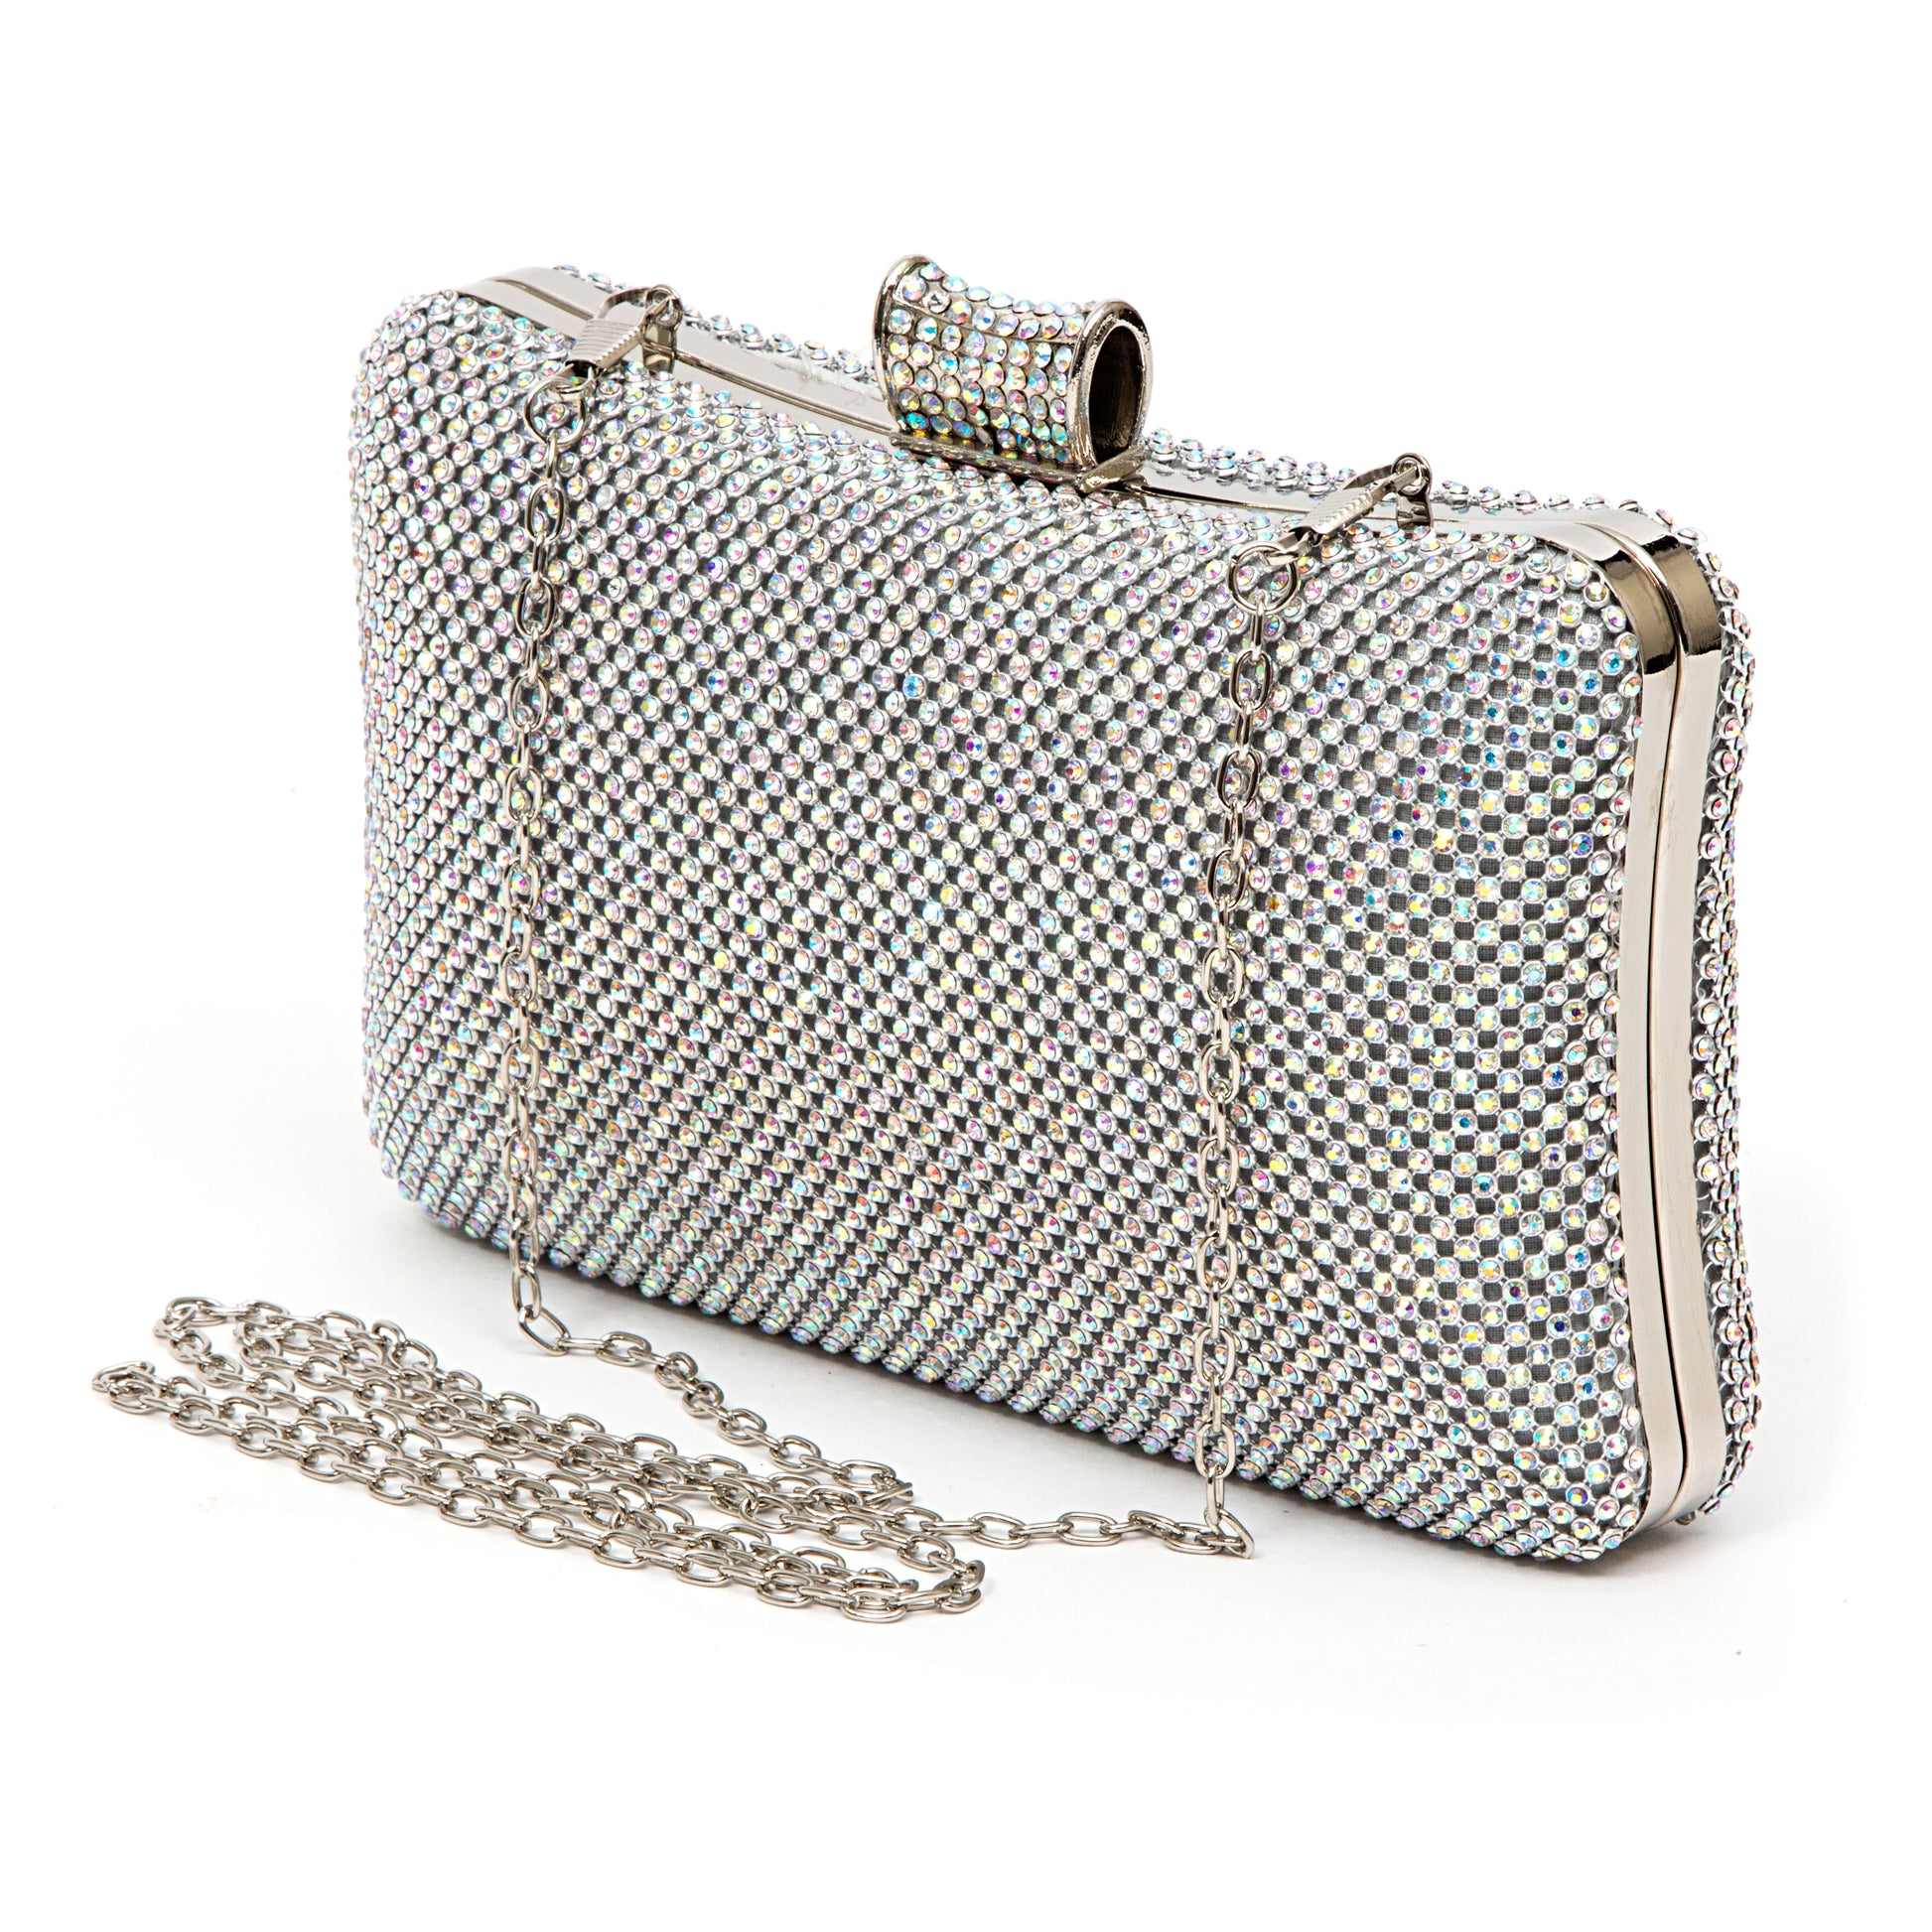 Lady Couture 2014-2 Dressy Handbag With Stones On Both Sides - ninetyunion